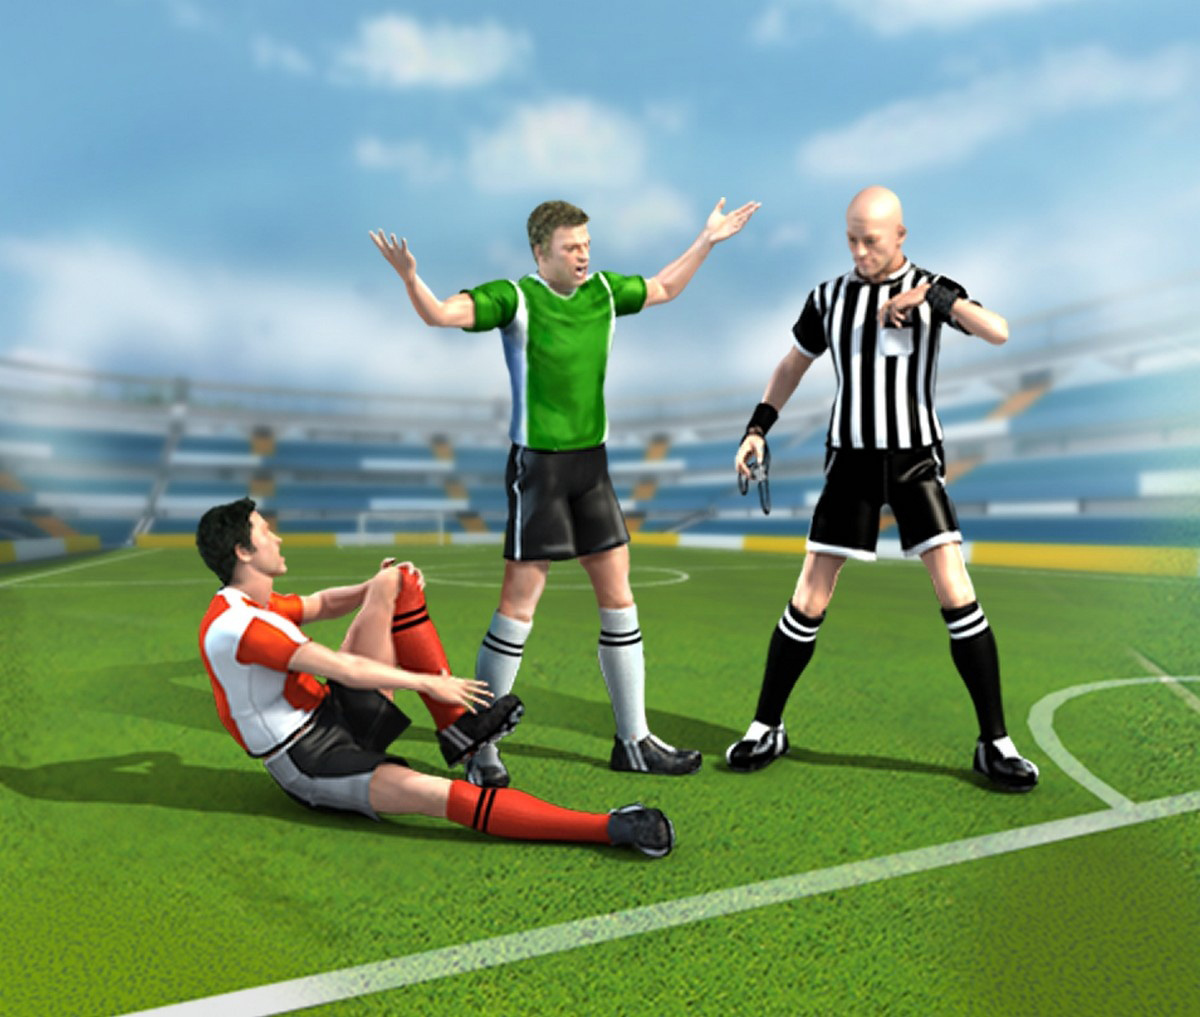 Браузерный онлайн симулятор - Goal United